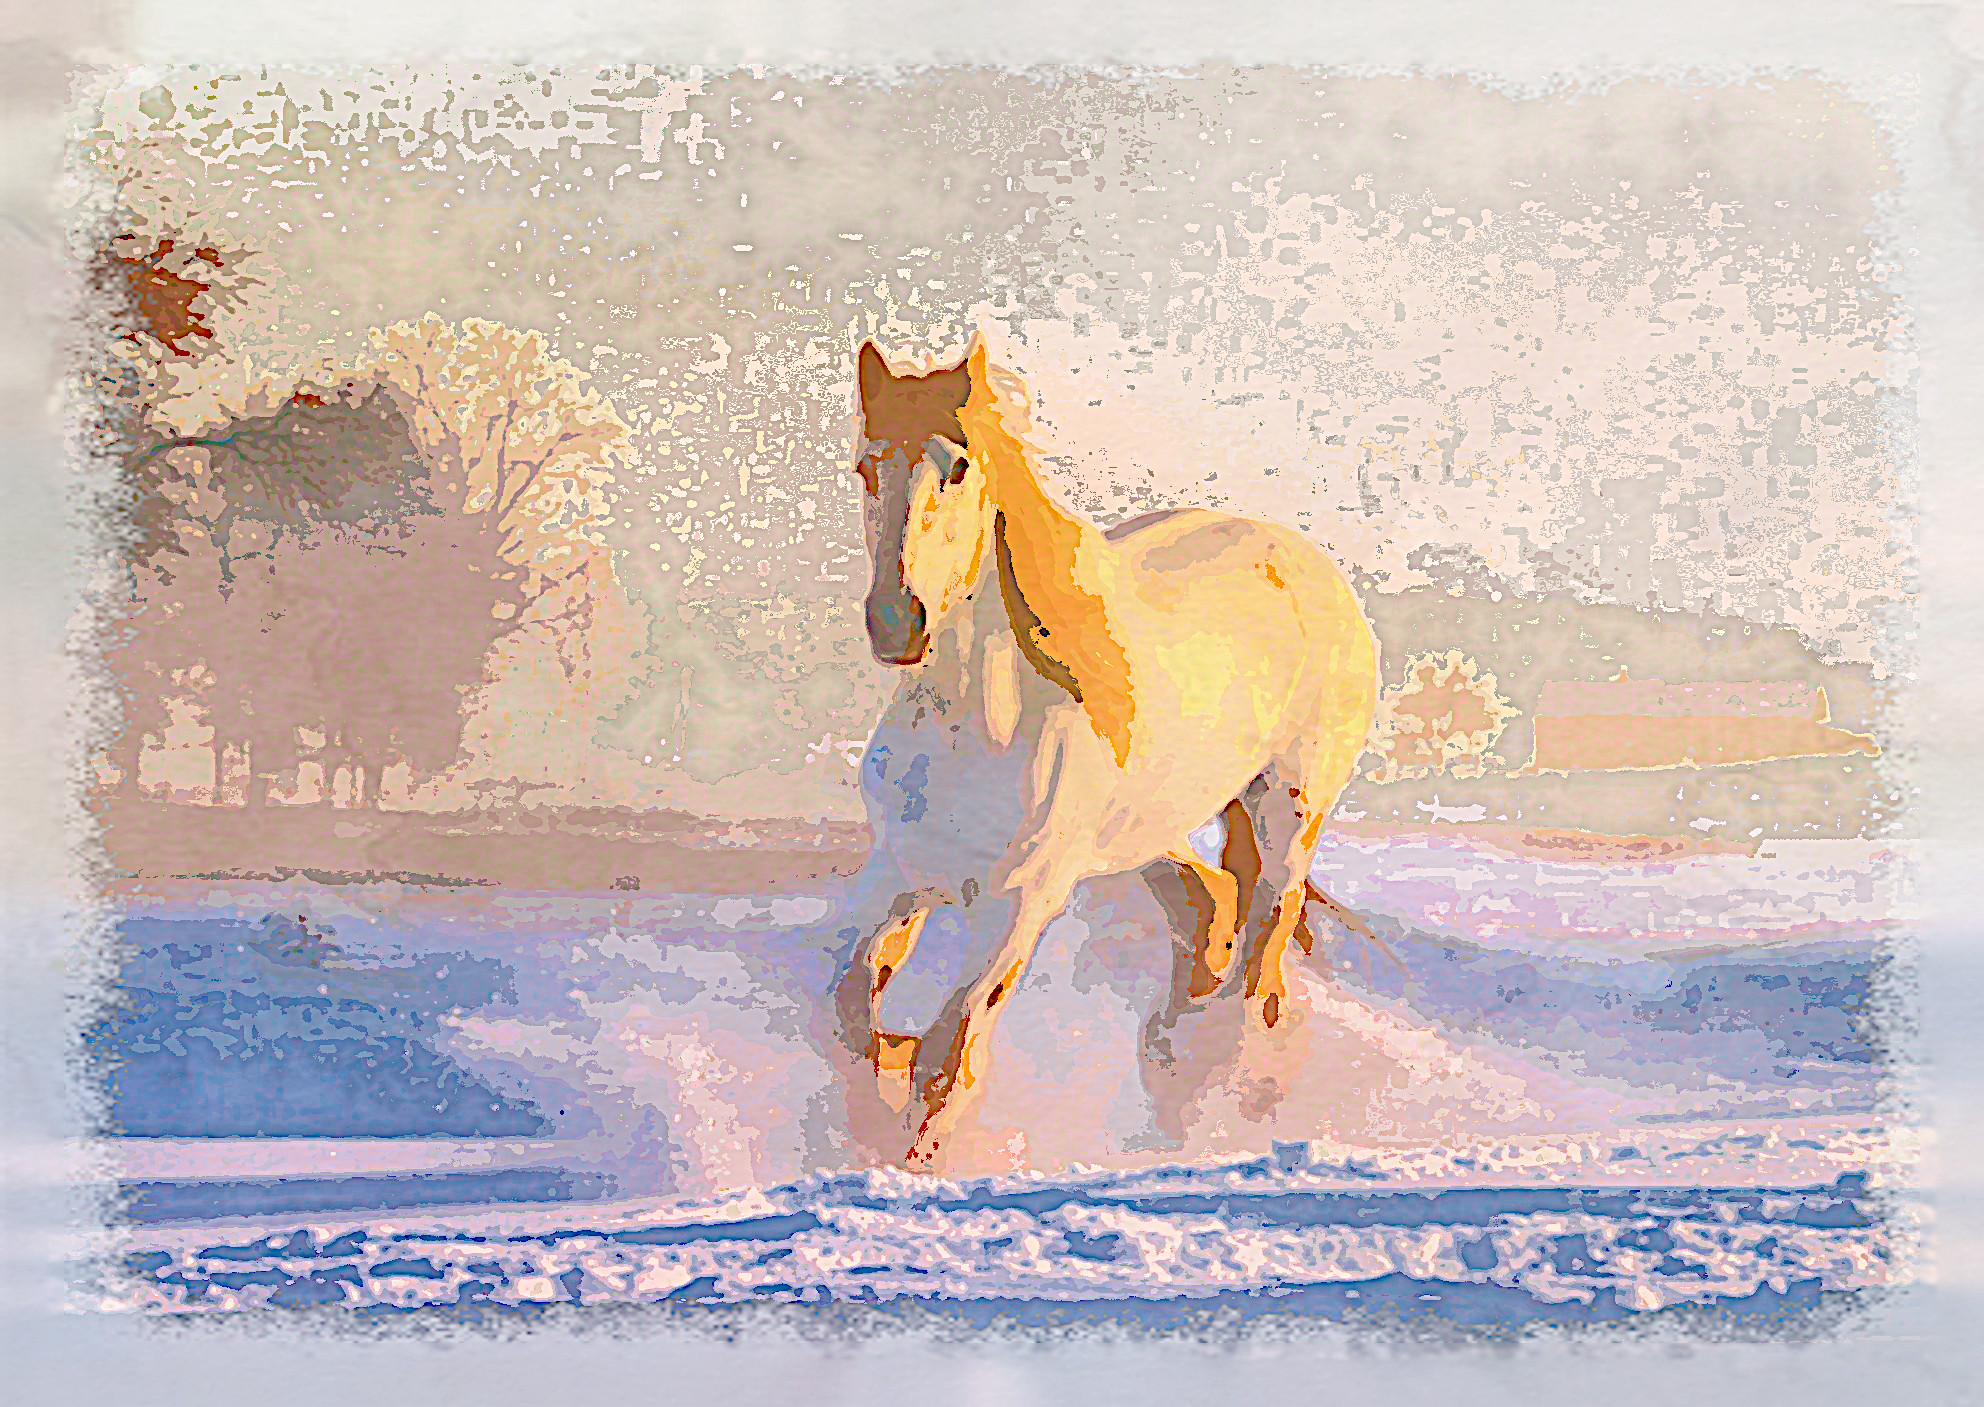 2020-03-19 08-05-06 white-horse-3010129_1920 as a digital aquarel, using18 colours, source animal, look normal.jpg